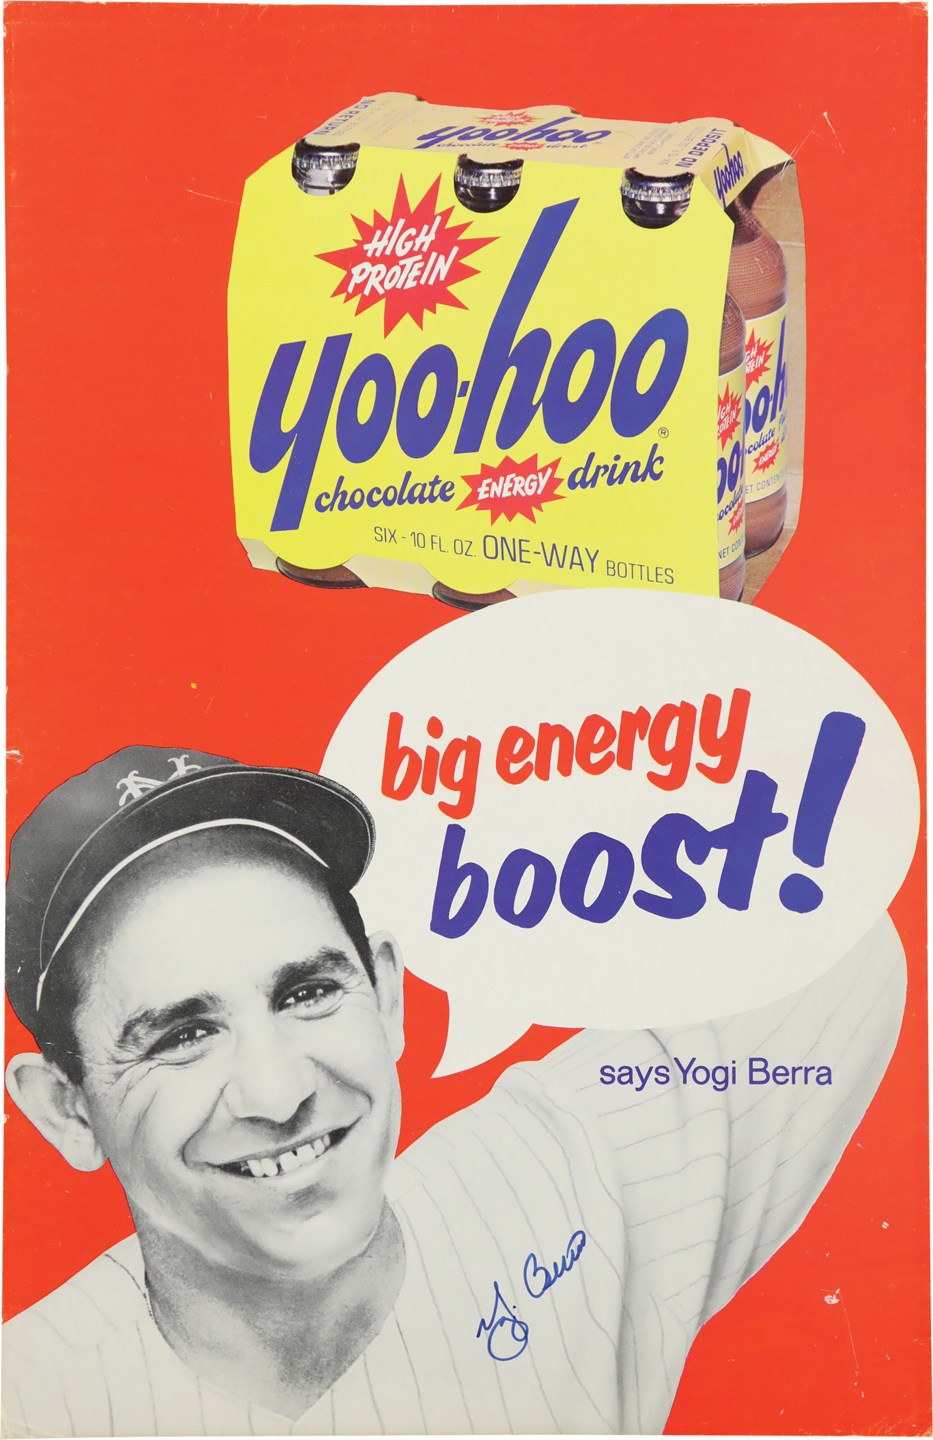 Baseball Memorabilia - 1960s Yogi Berra Signed Yoo-Hoo Advertising Sign (PSA 10 Auto)